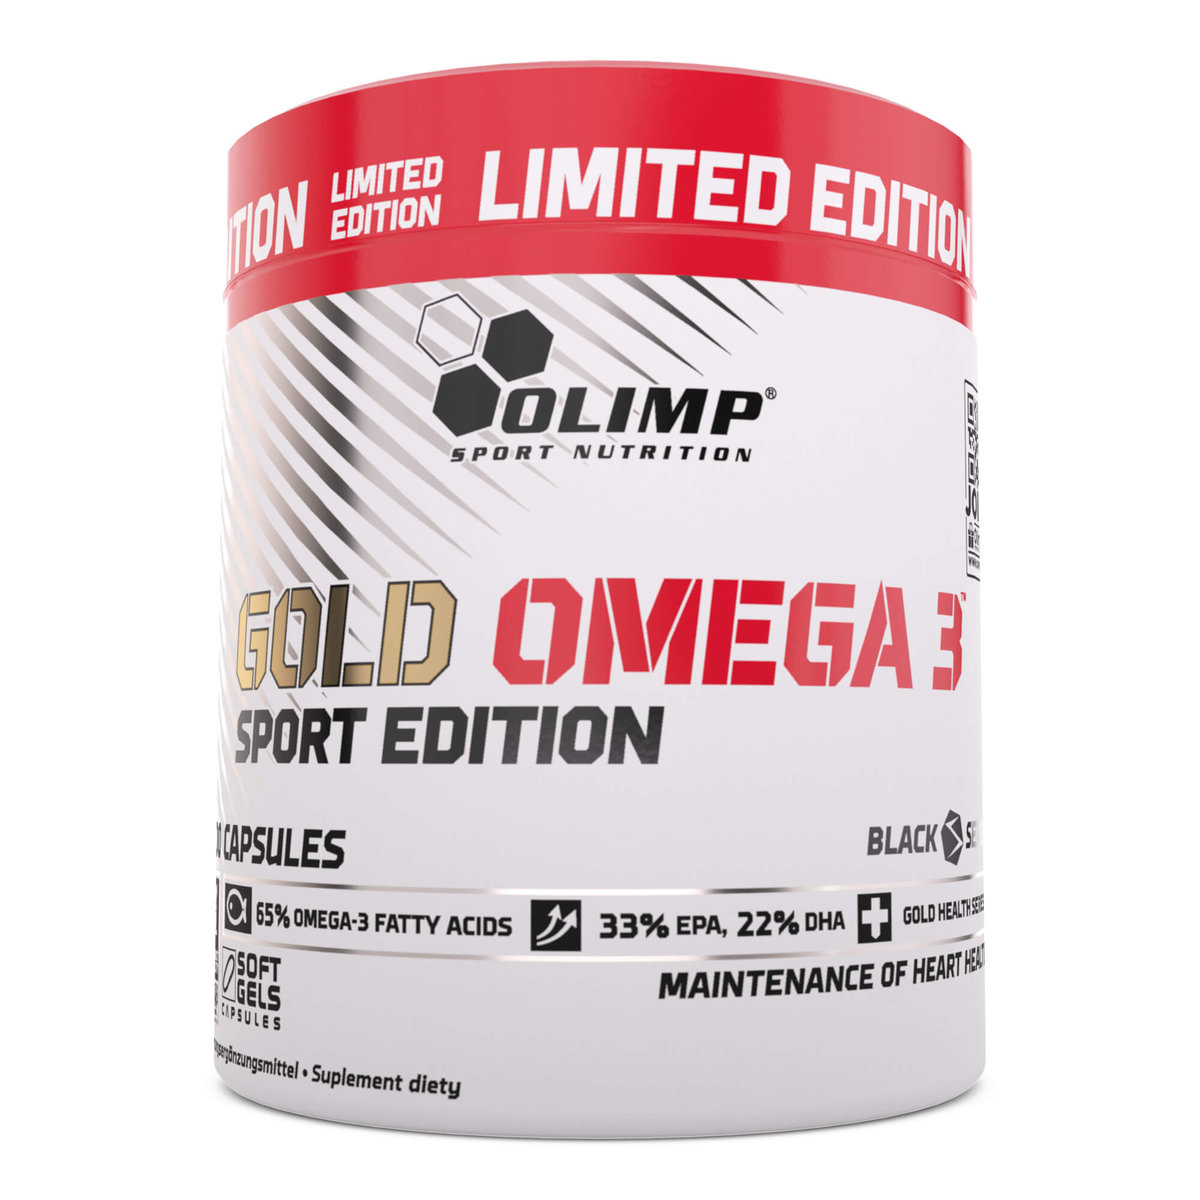 Olimp Gold Omega 3? Sport Edition - 200 Kapsułek - Limited Edition